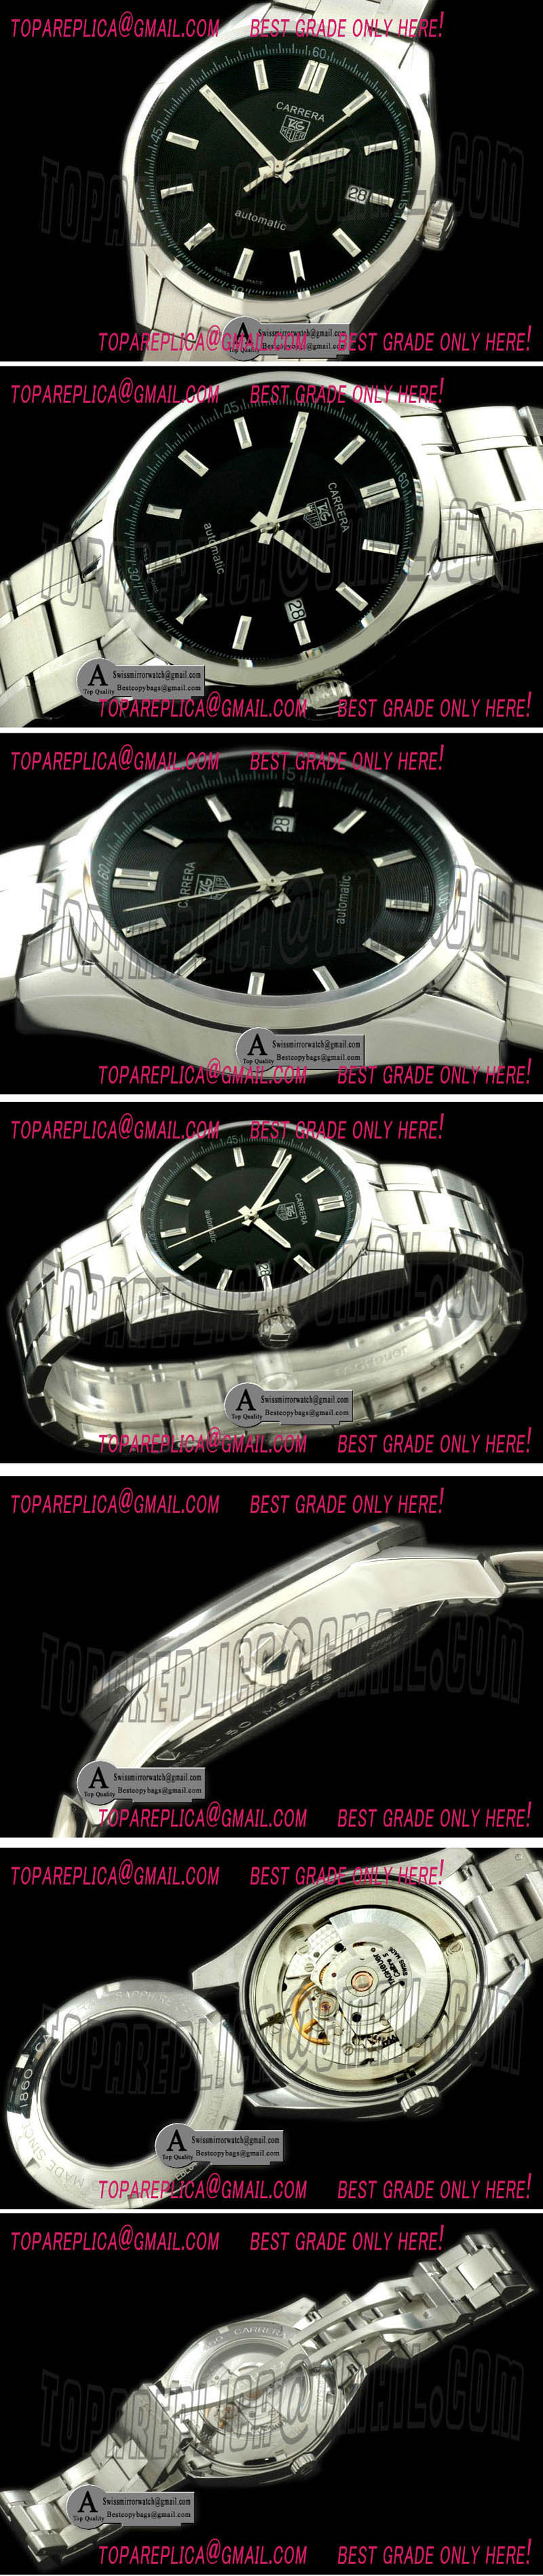 Tag Heuer Carrera Automatic Men SS Black Asian Eta 2824 2 Replica Watches